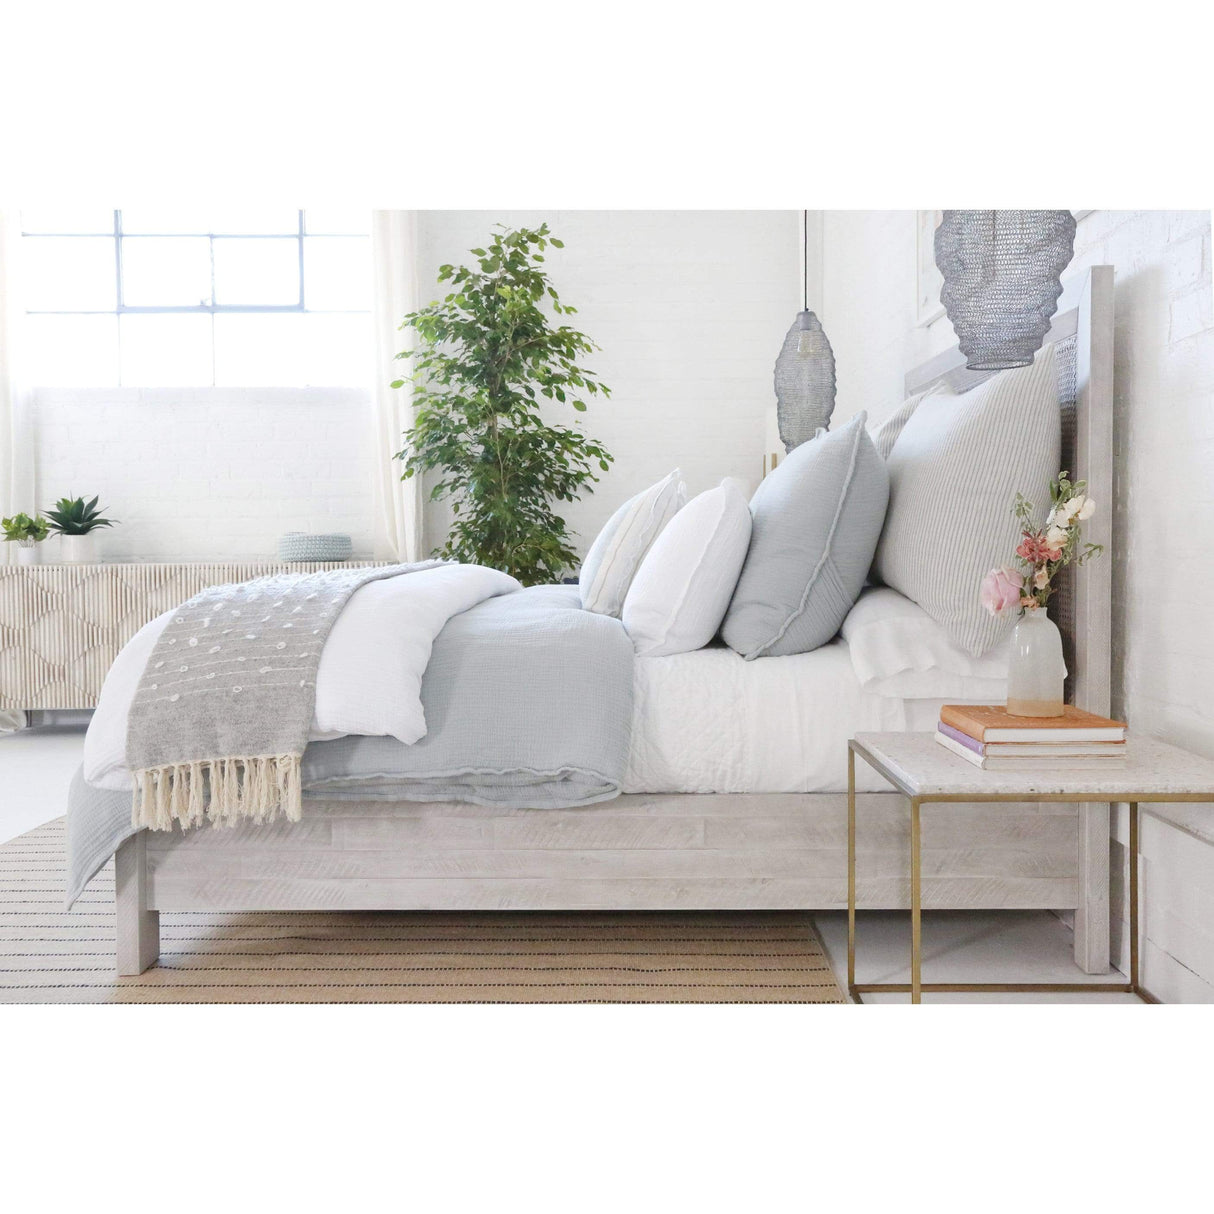 Dovetail Geneva Bed Furniture